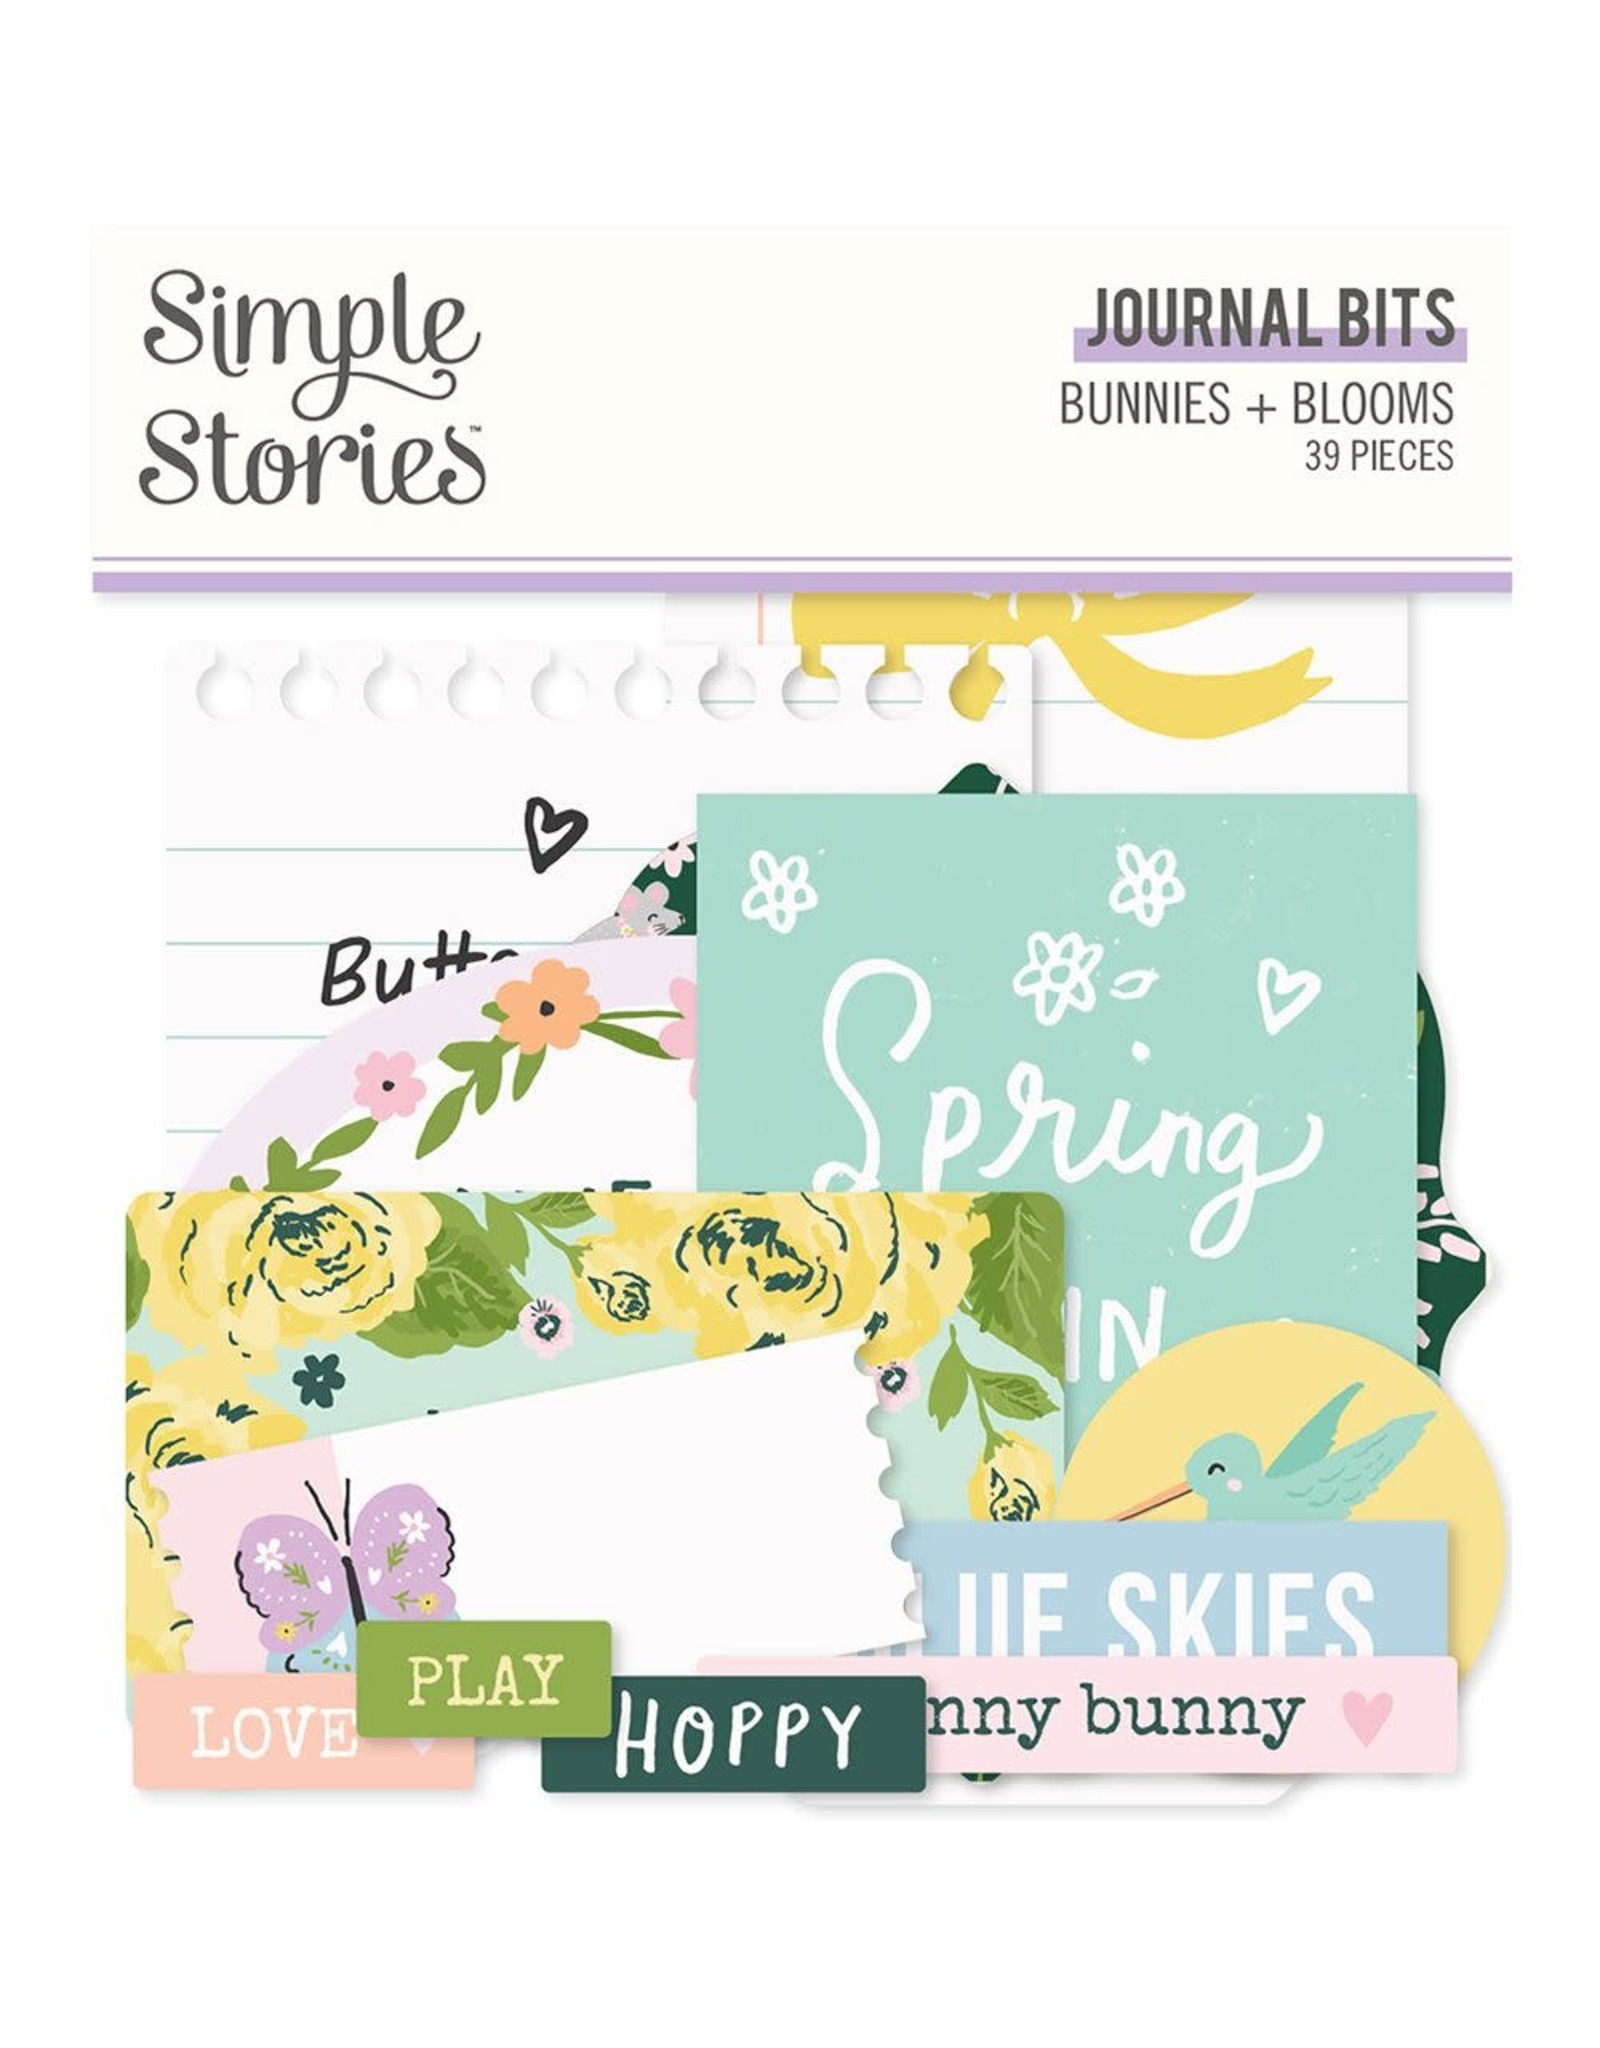 Simple Stories Bunnies + Blooms Journal Bits